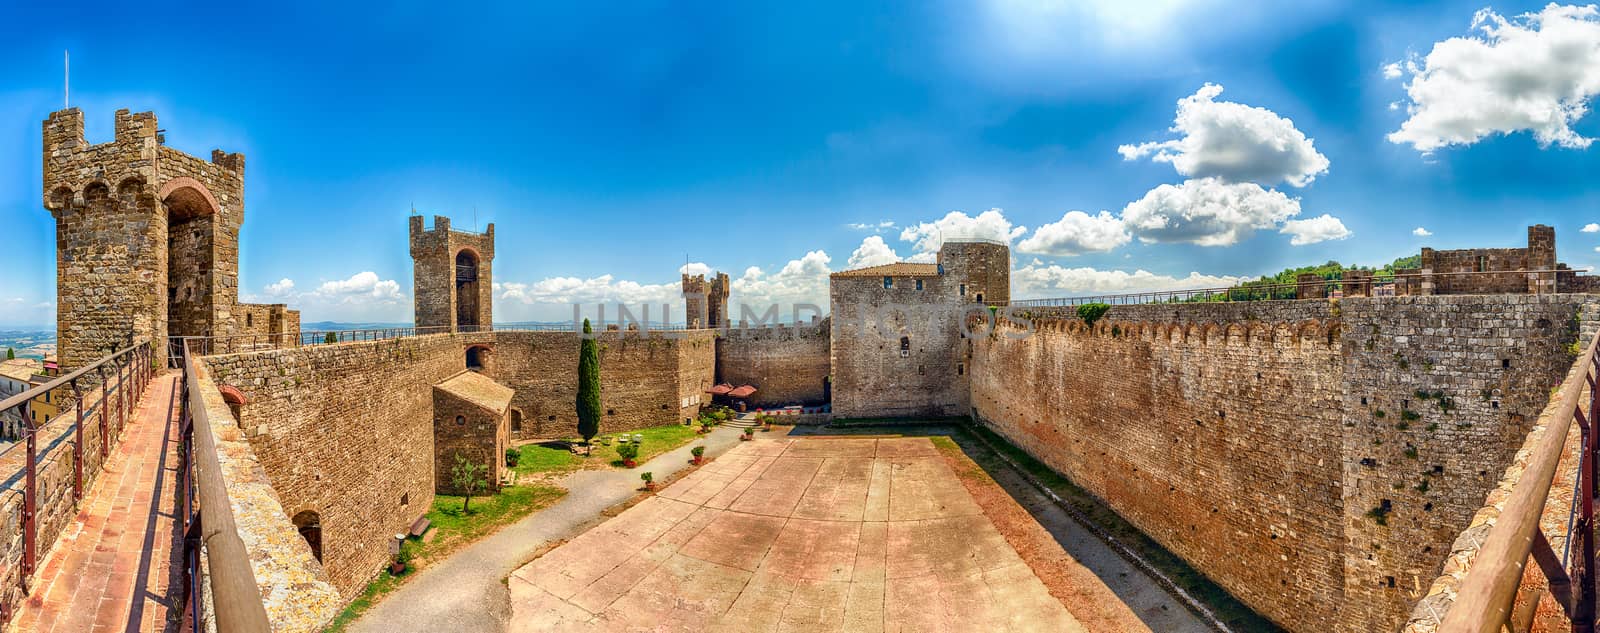 Medieval italian fortress, iconic landmark in Montalcino, Tuscan by marcorubino